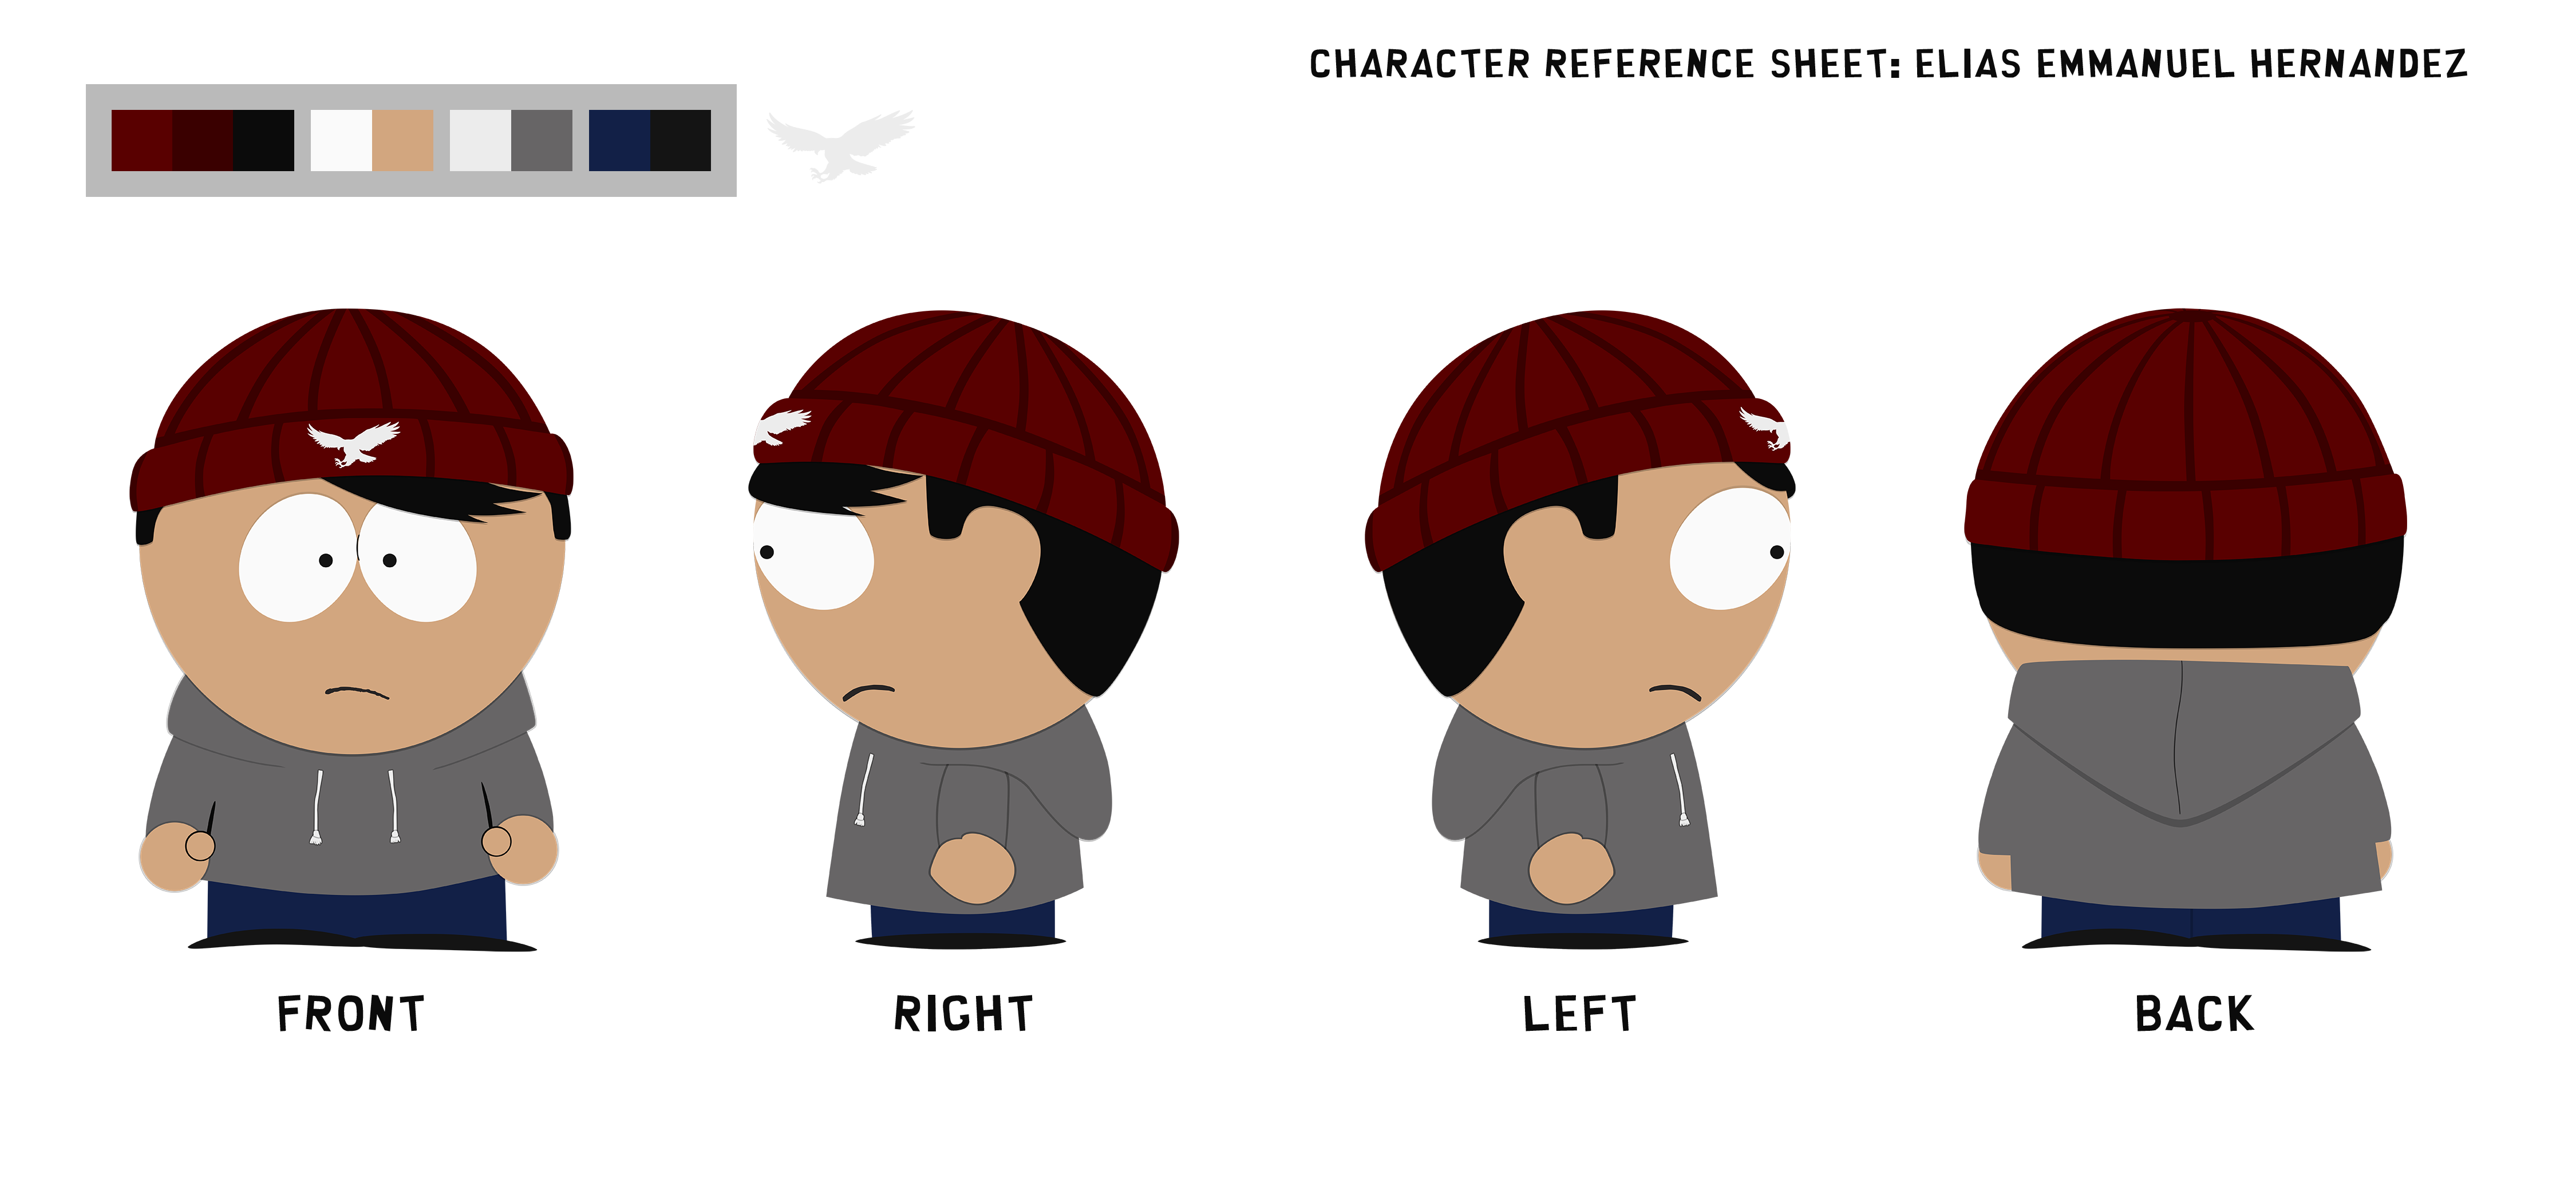 South Park  Small Boys by DeftriaI on DeviantArt